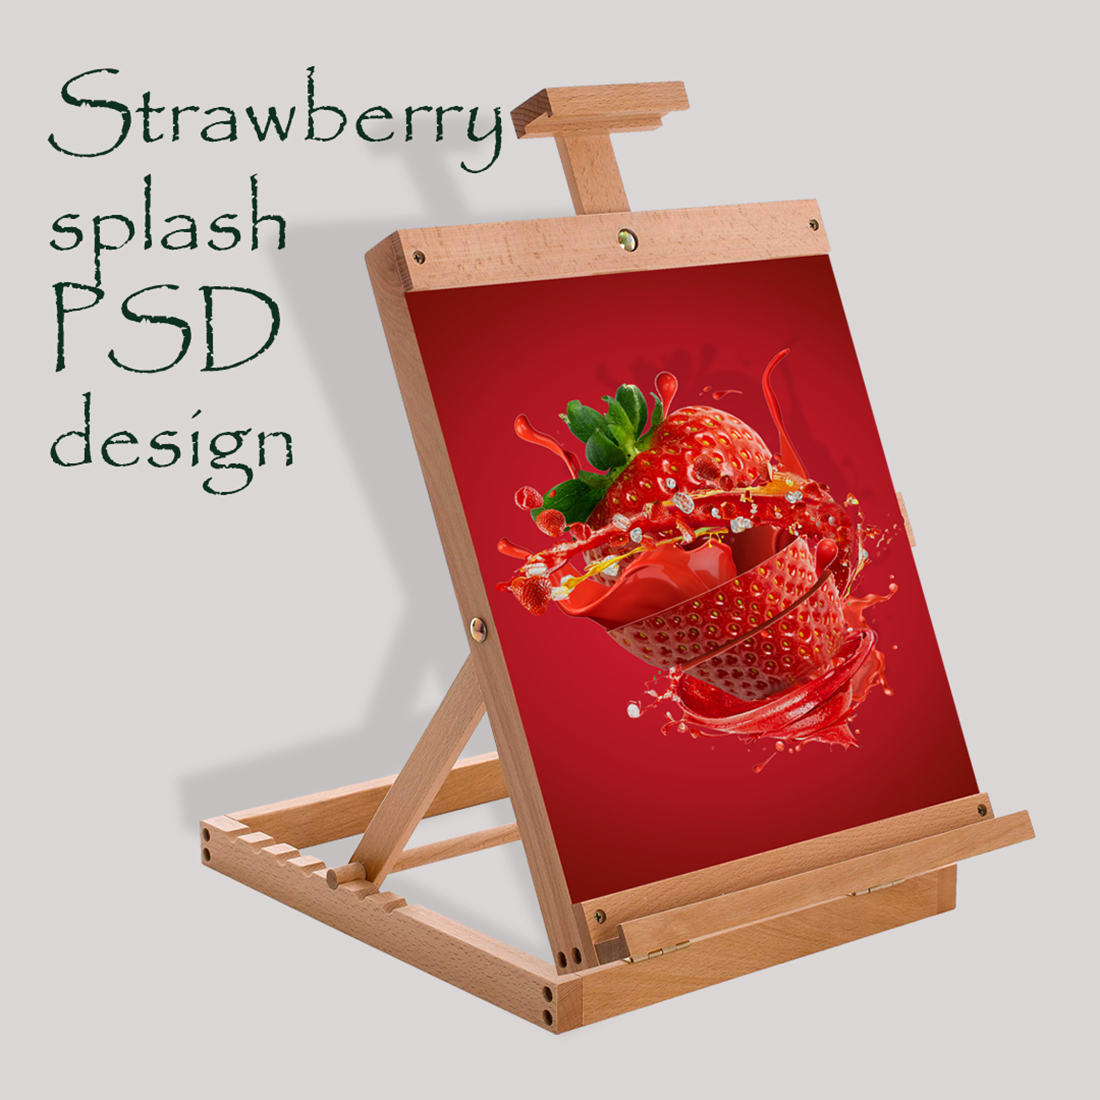 High quality PSD Realistic strawberry splash design preview image.